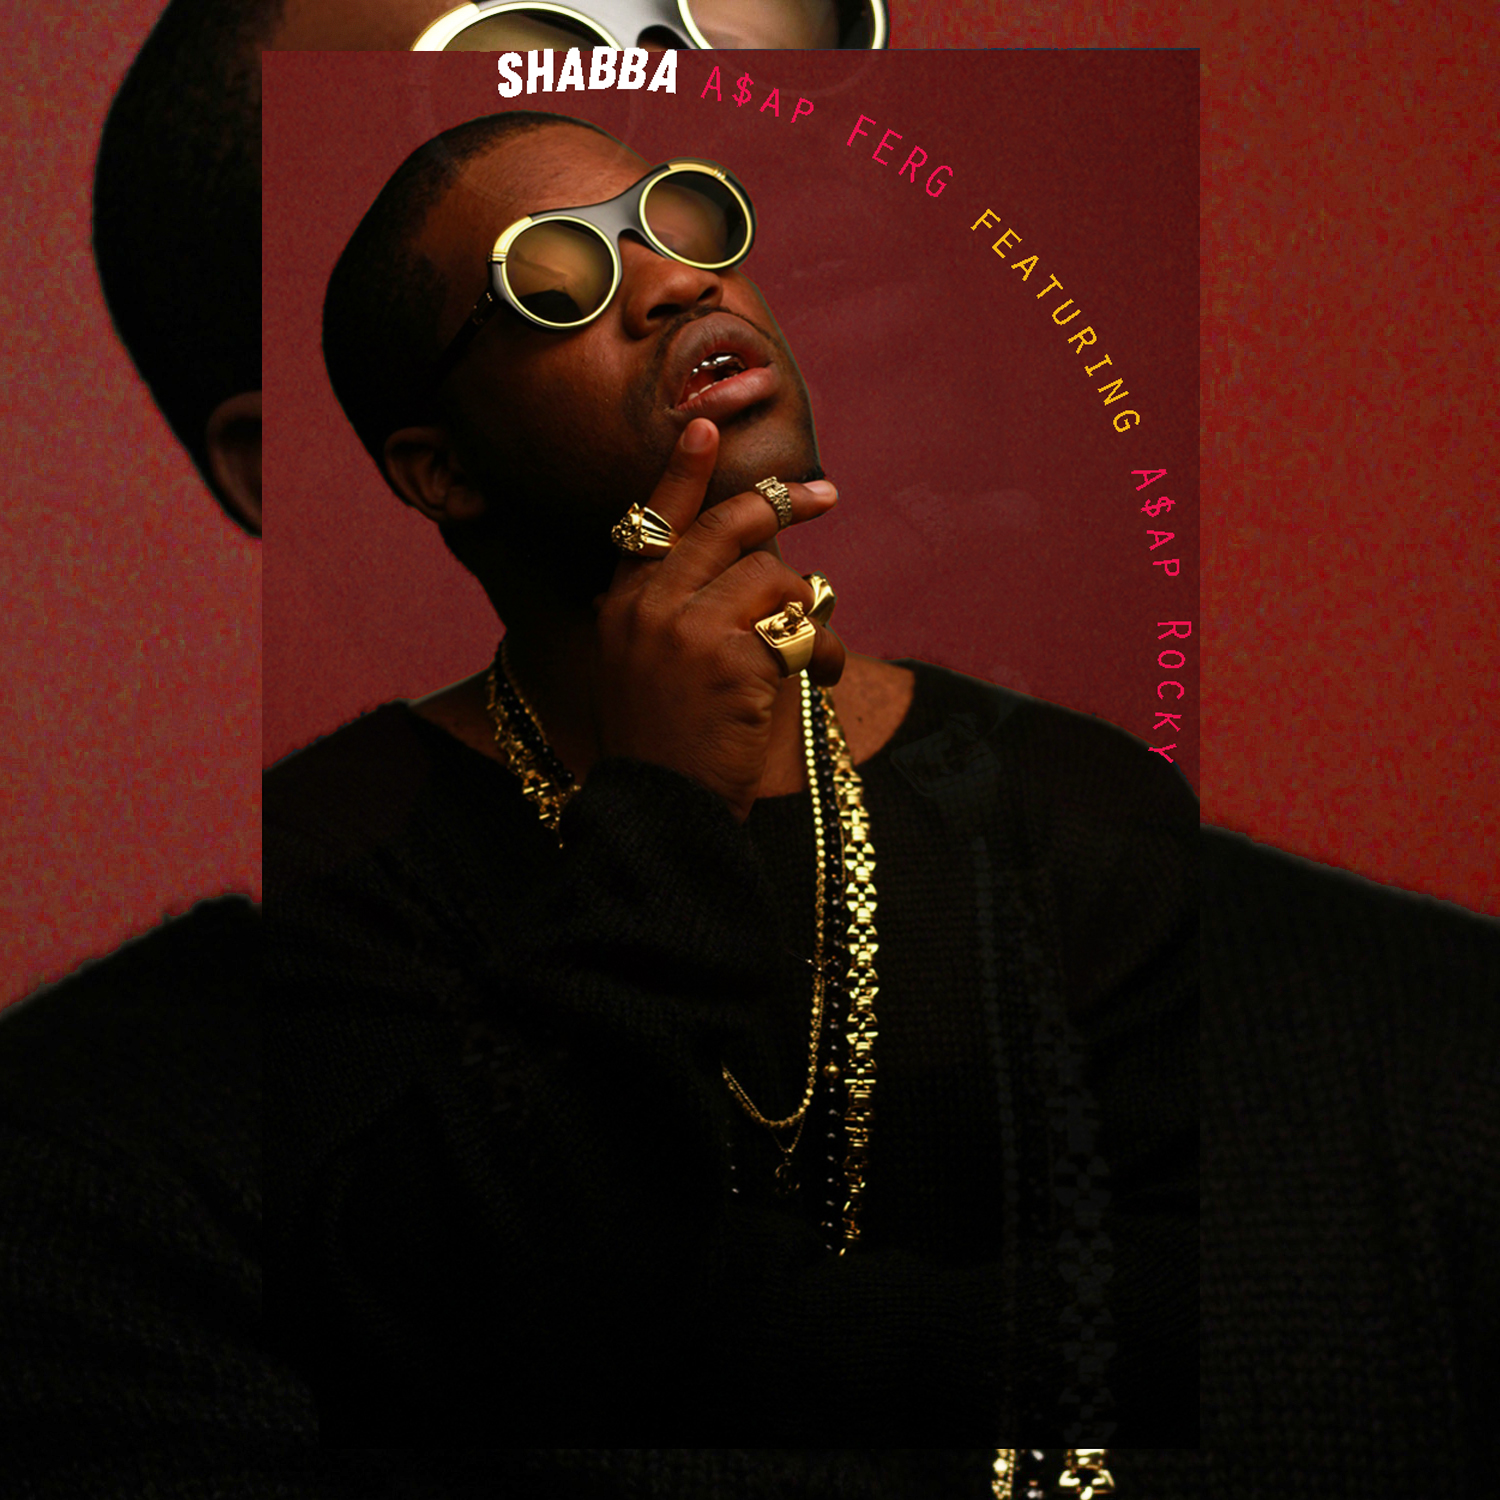 Shabba - A$AP Ferg